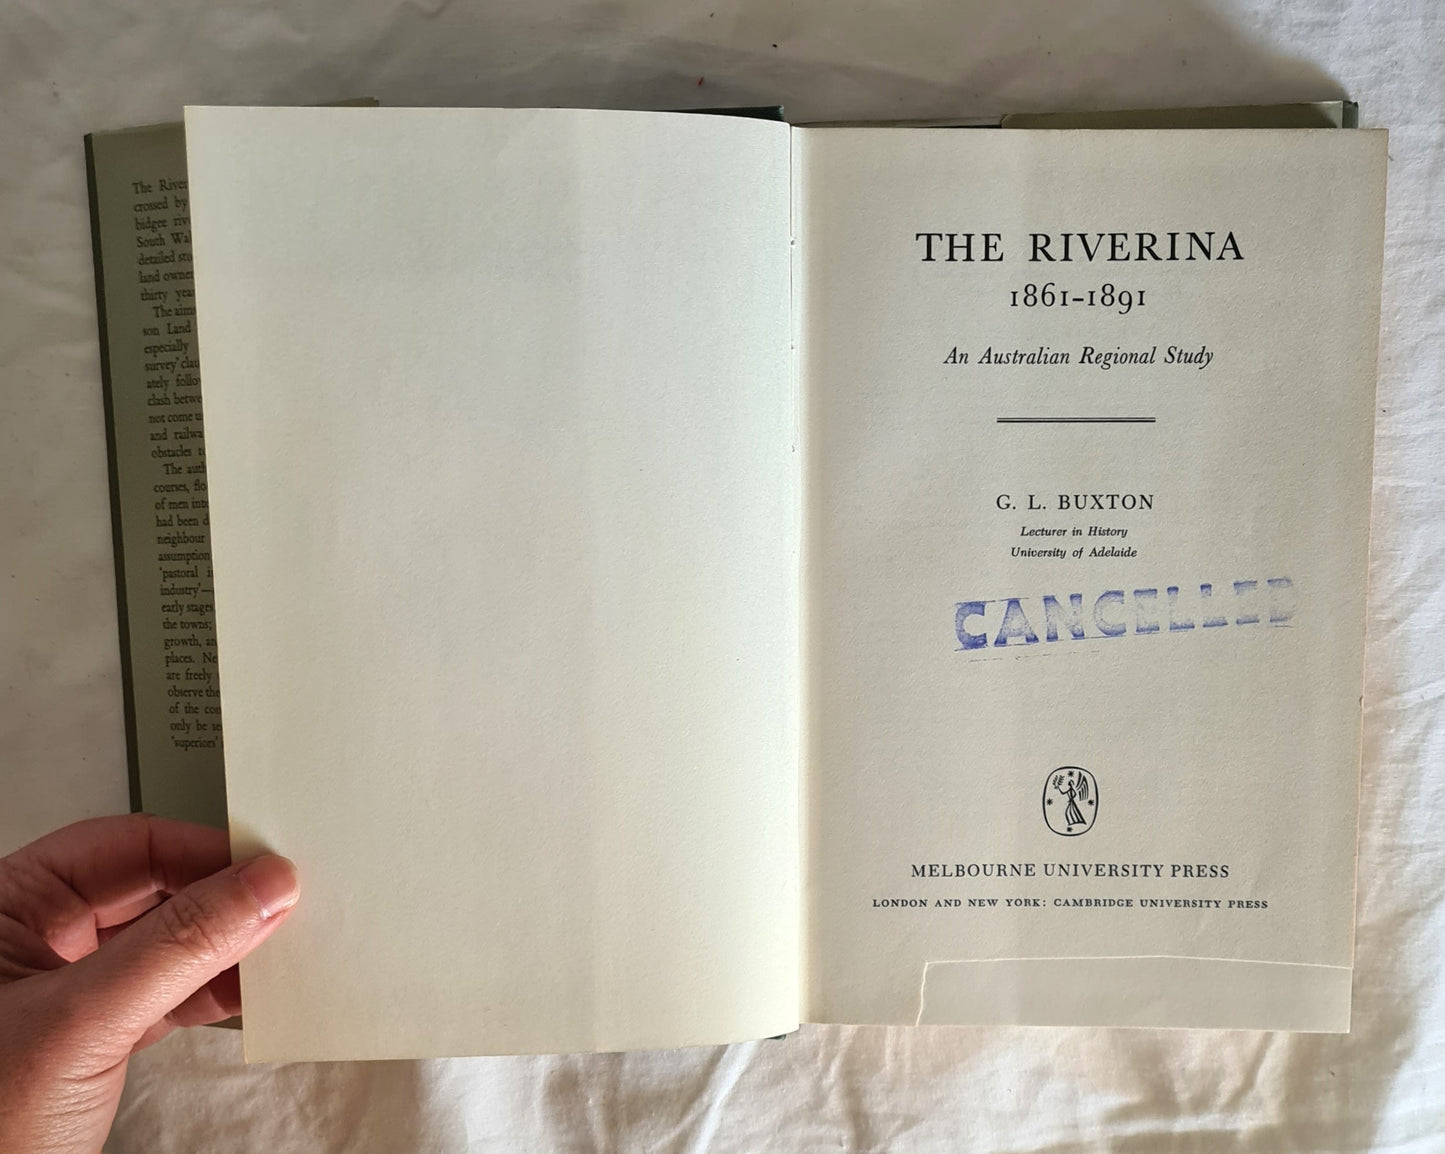 The Riverina 1861-1891  An Australian Regional Study  by G. L. Buxton